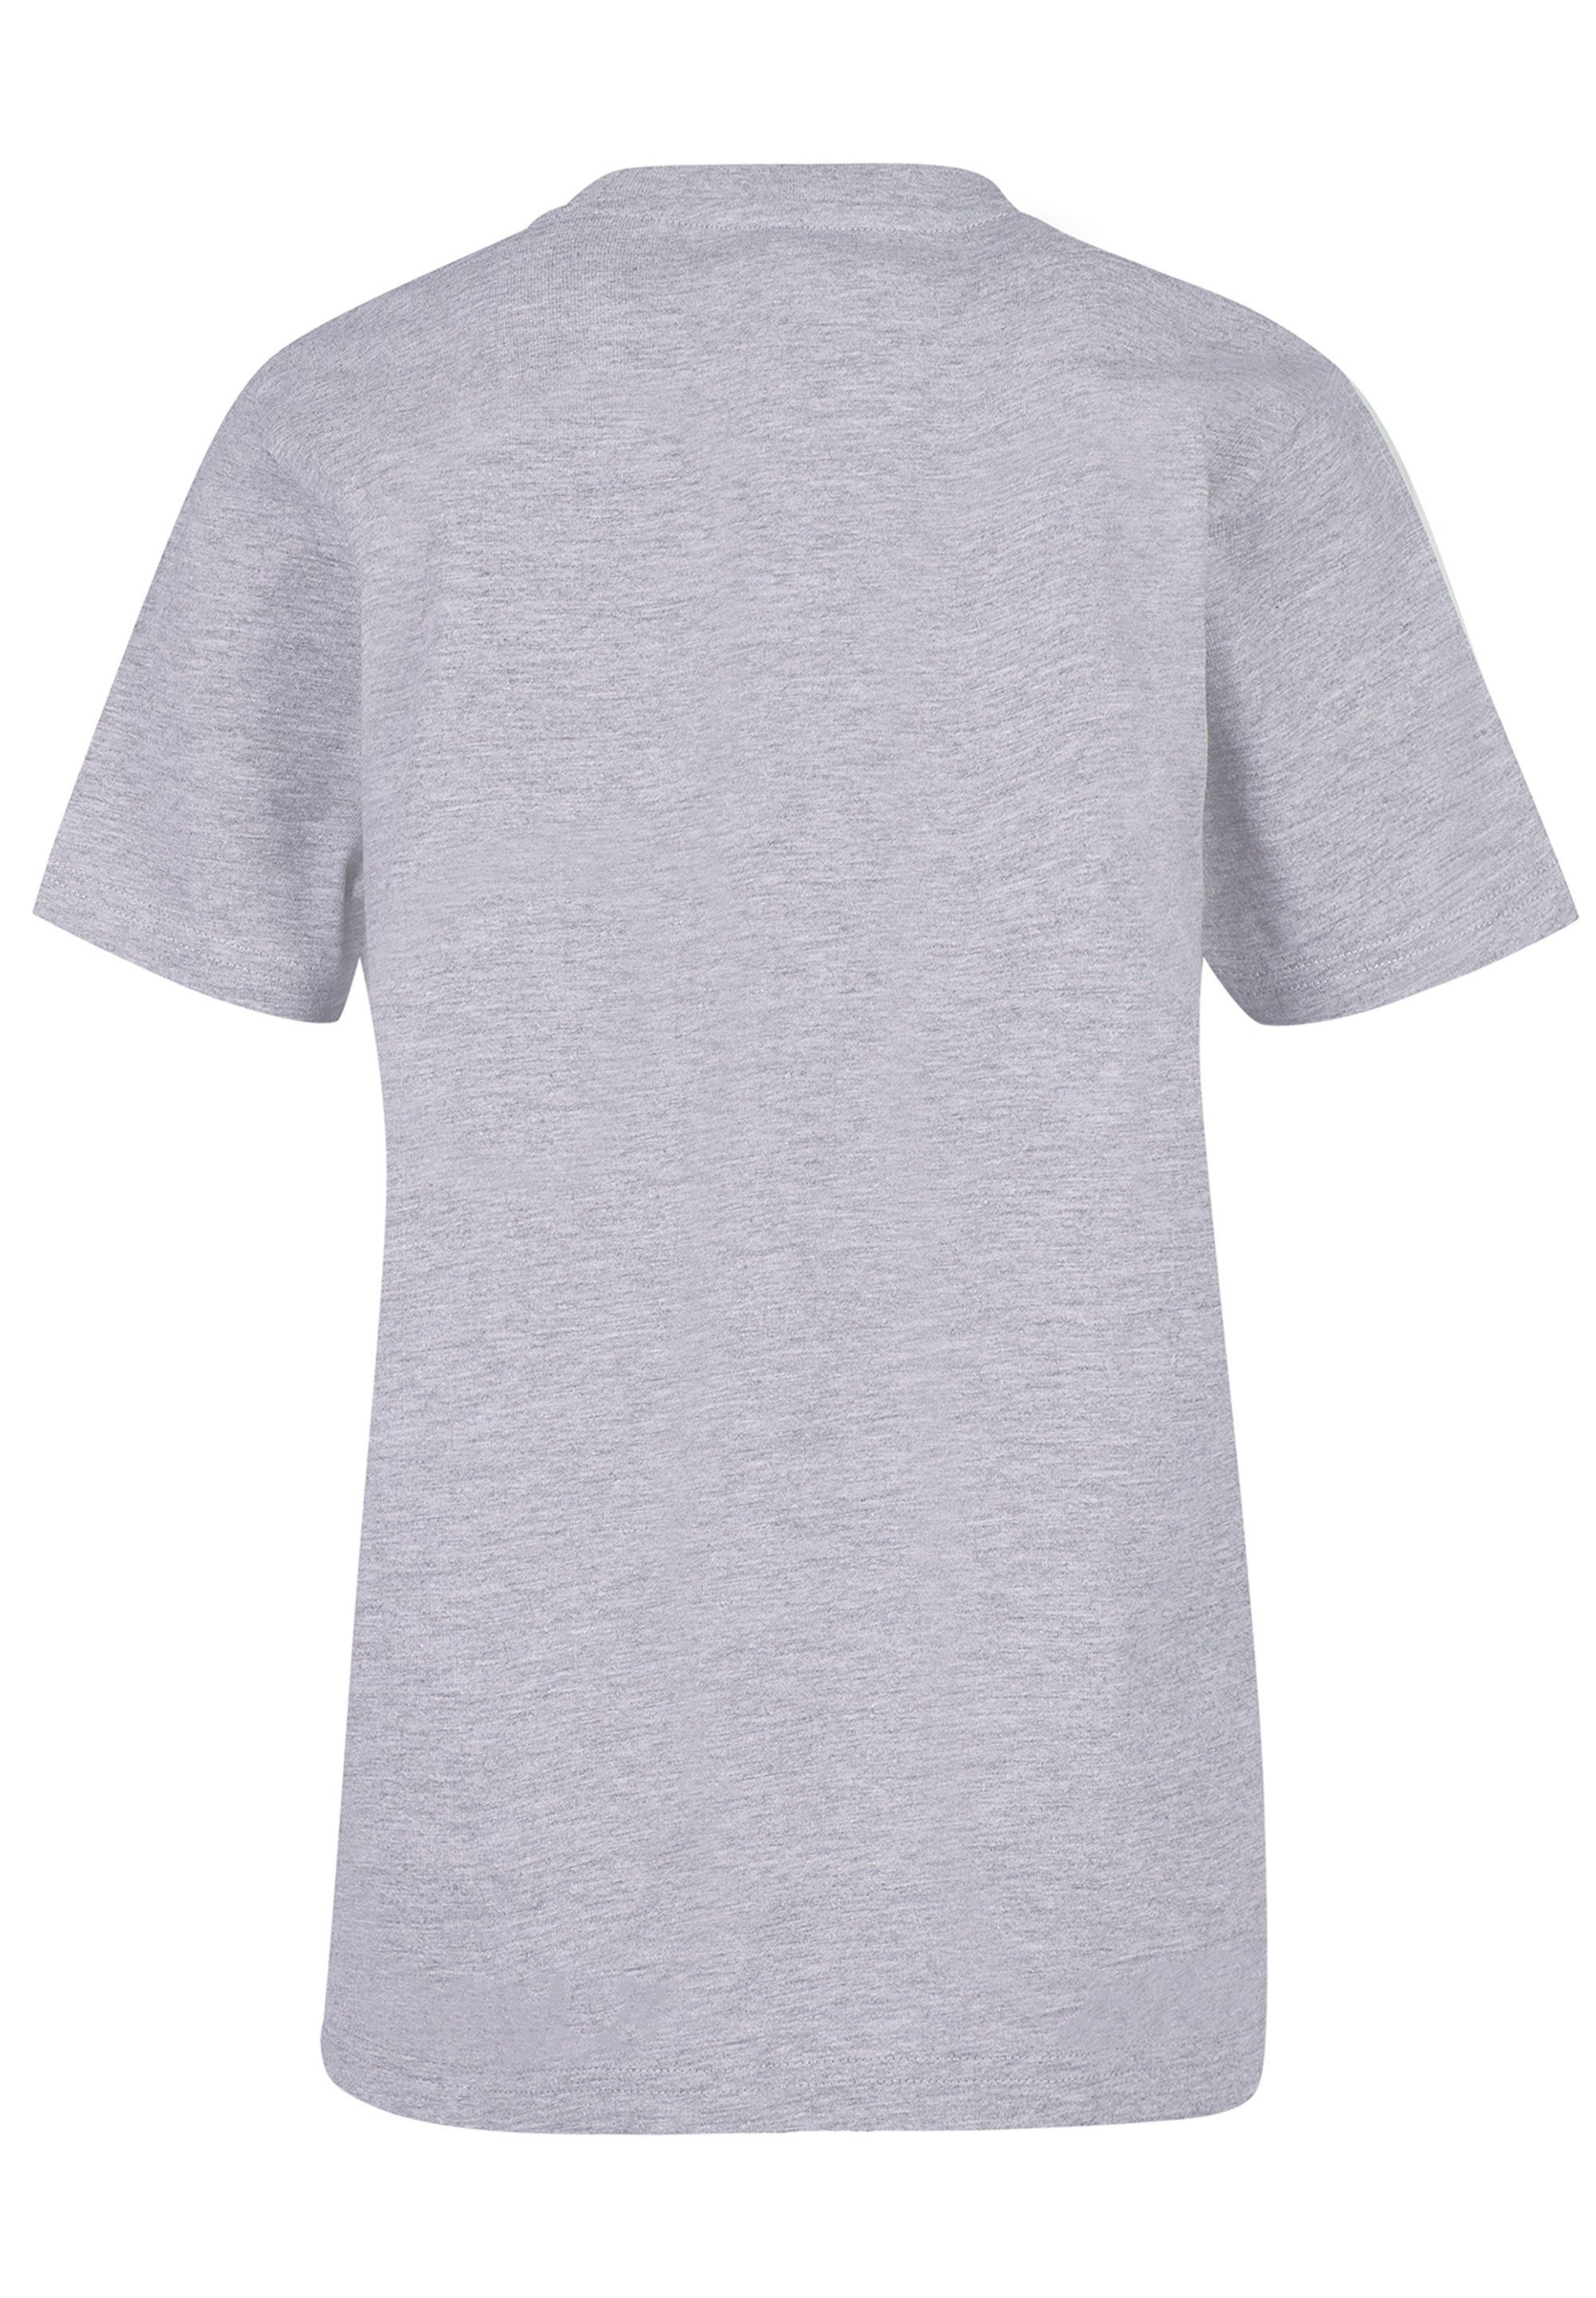 T-Shirt Unisex Print Kirschblüten grey heather Baum Tee F4NT4STIC